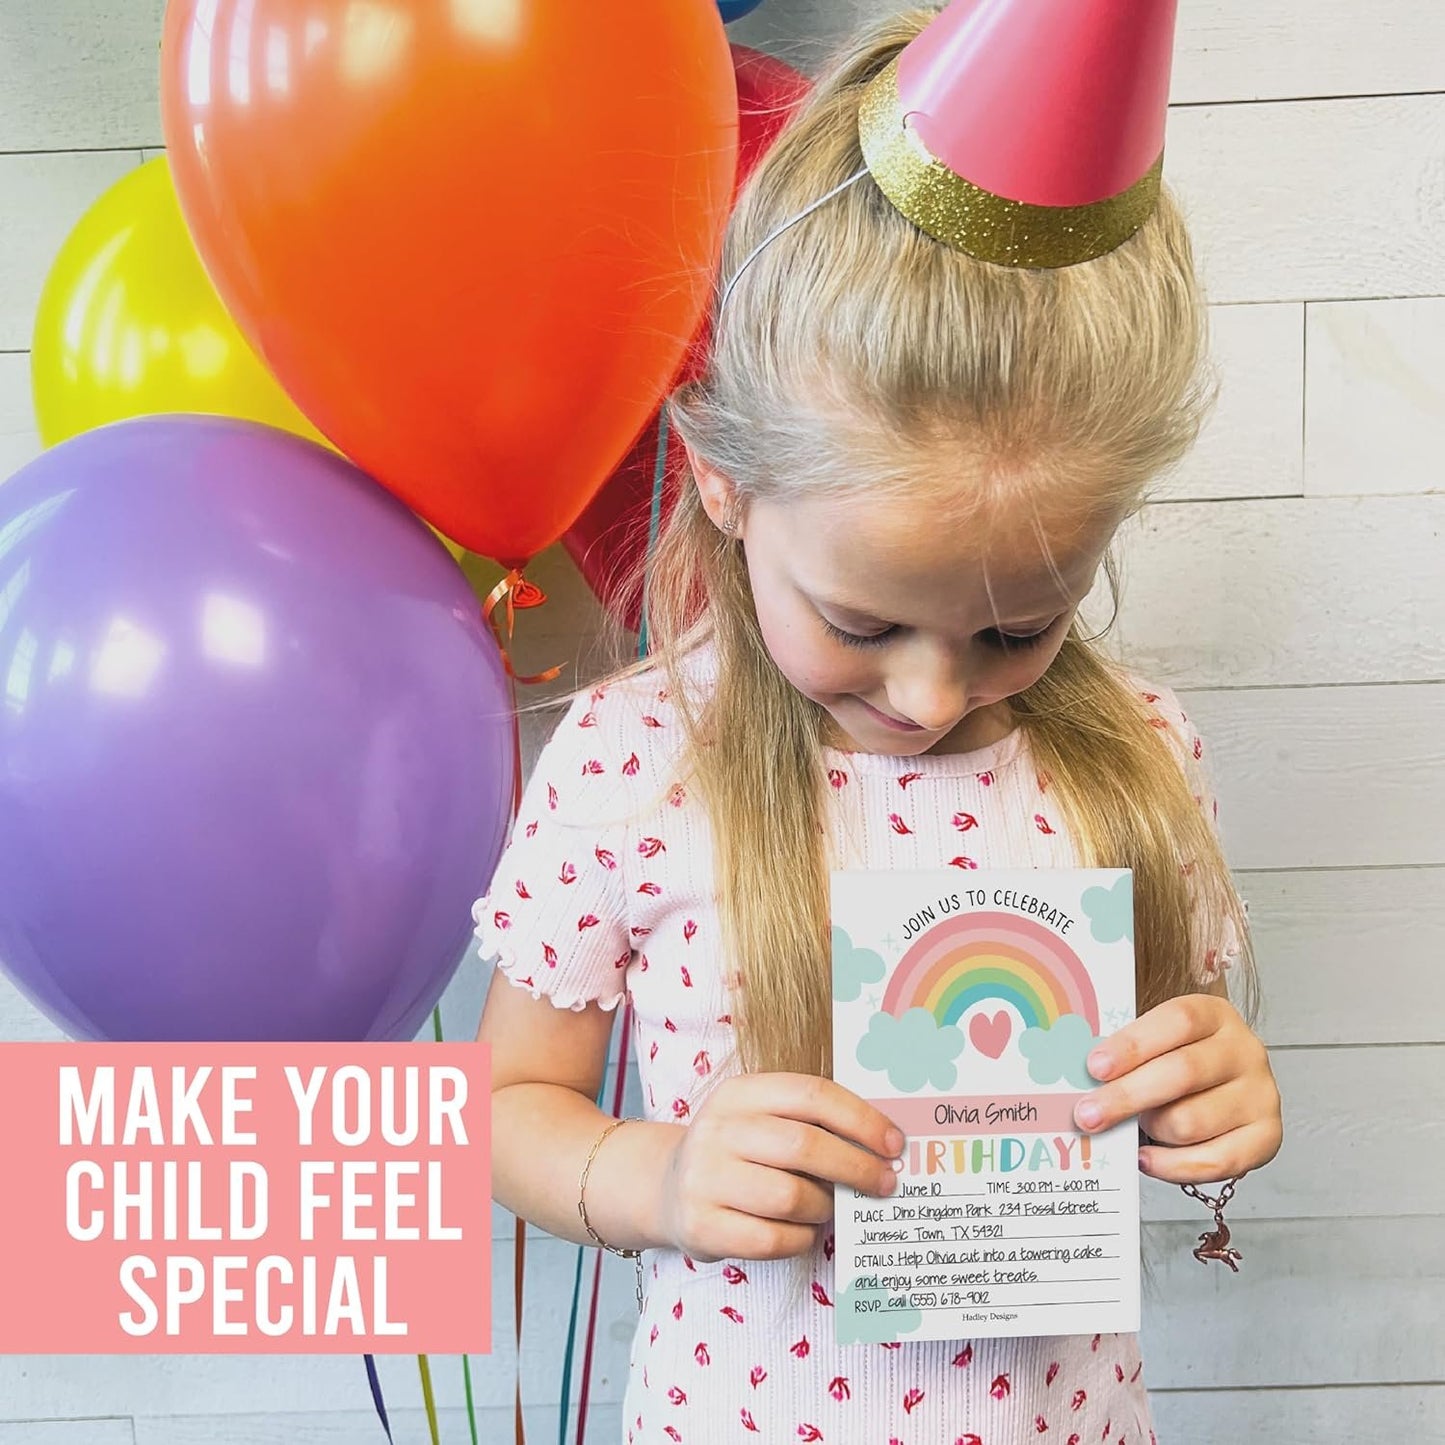 15 Colorful Rainbow Birthday Invitations Girl - Birthday Party Invitations For Girls, Rainbow Party Invitations For Birthday Party Invitation Girl, Invitation Cards, Kids Birthday Invitations Girl